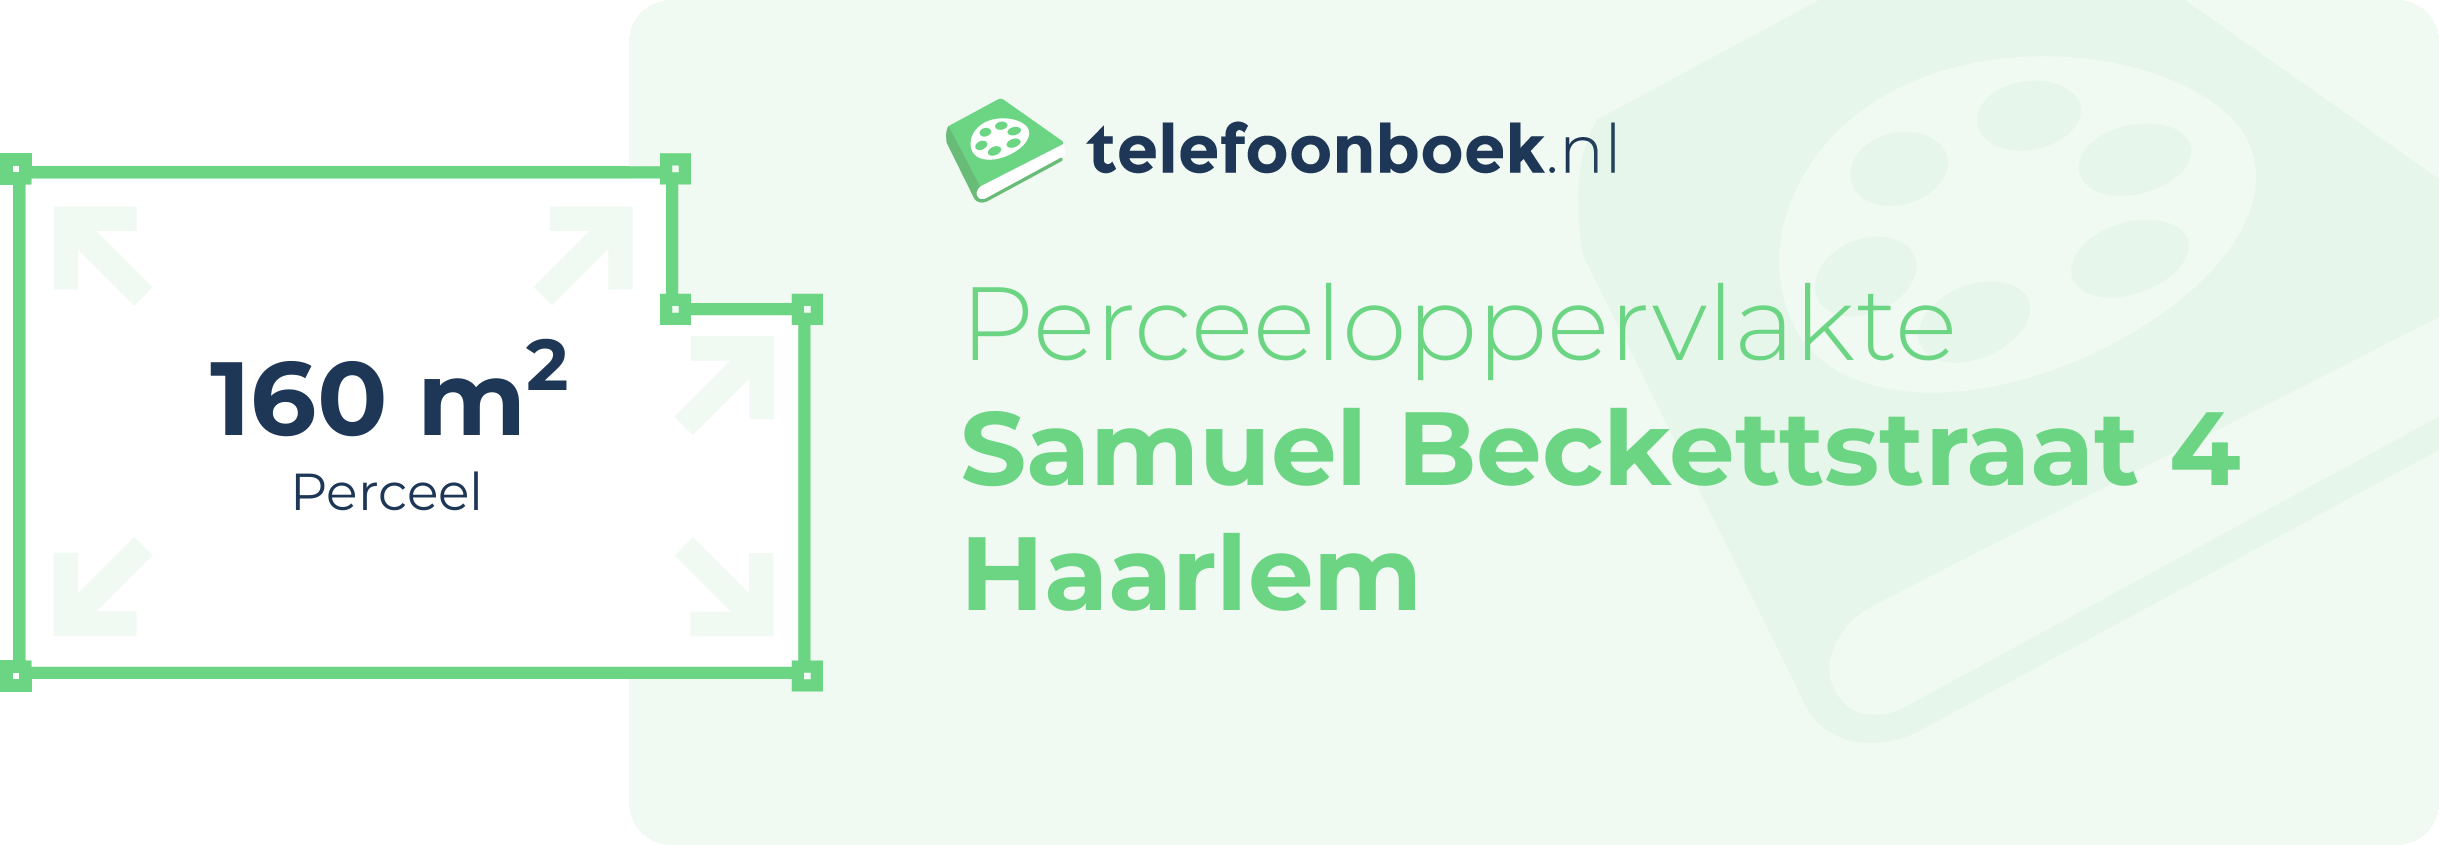 Perceeloppervlakte Samuel Beckettstraat 4 Haarlem